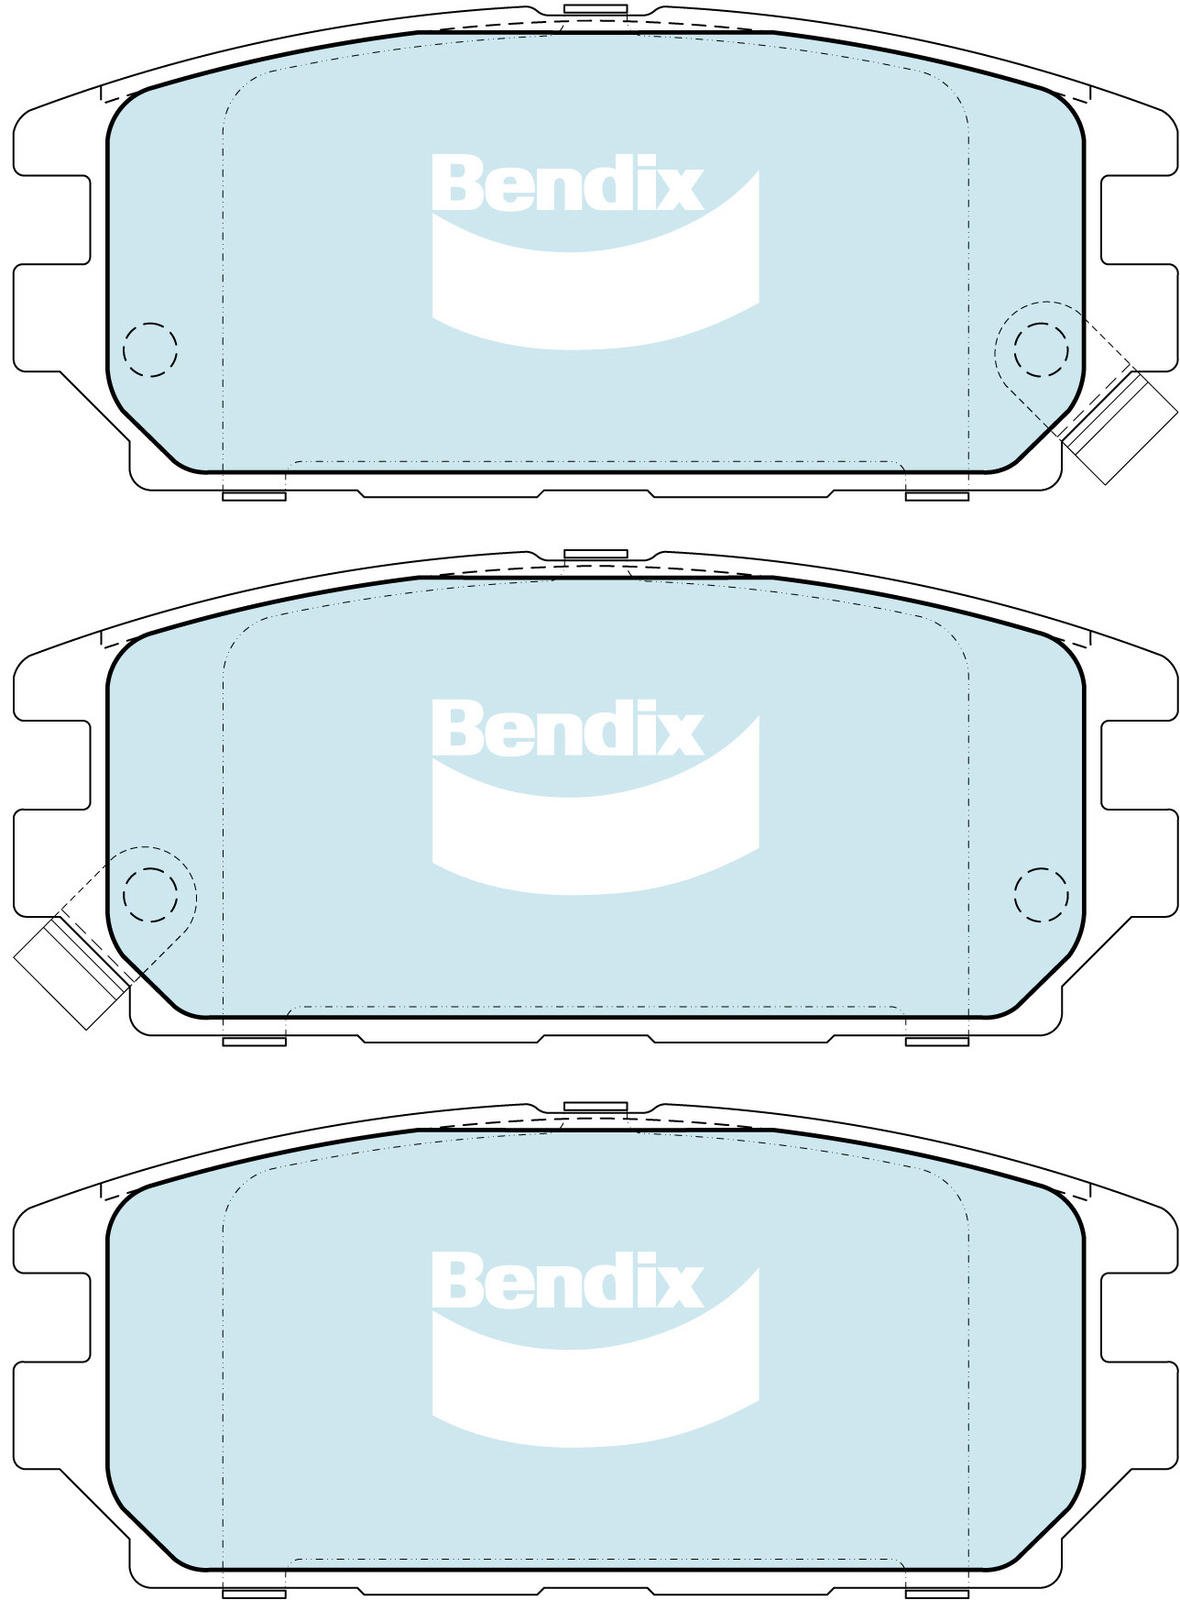 BENDIX-AU DB1238 ULT4WD